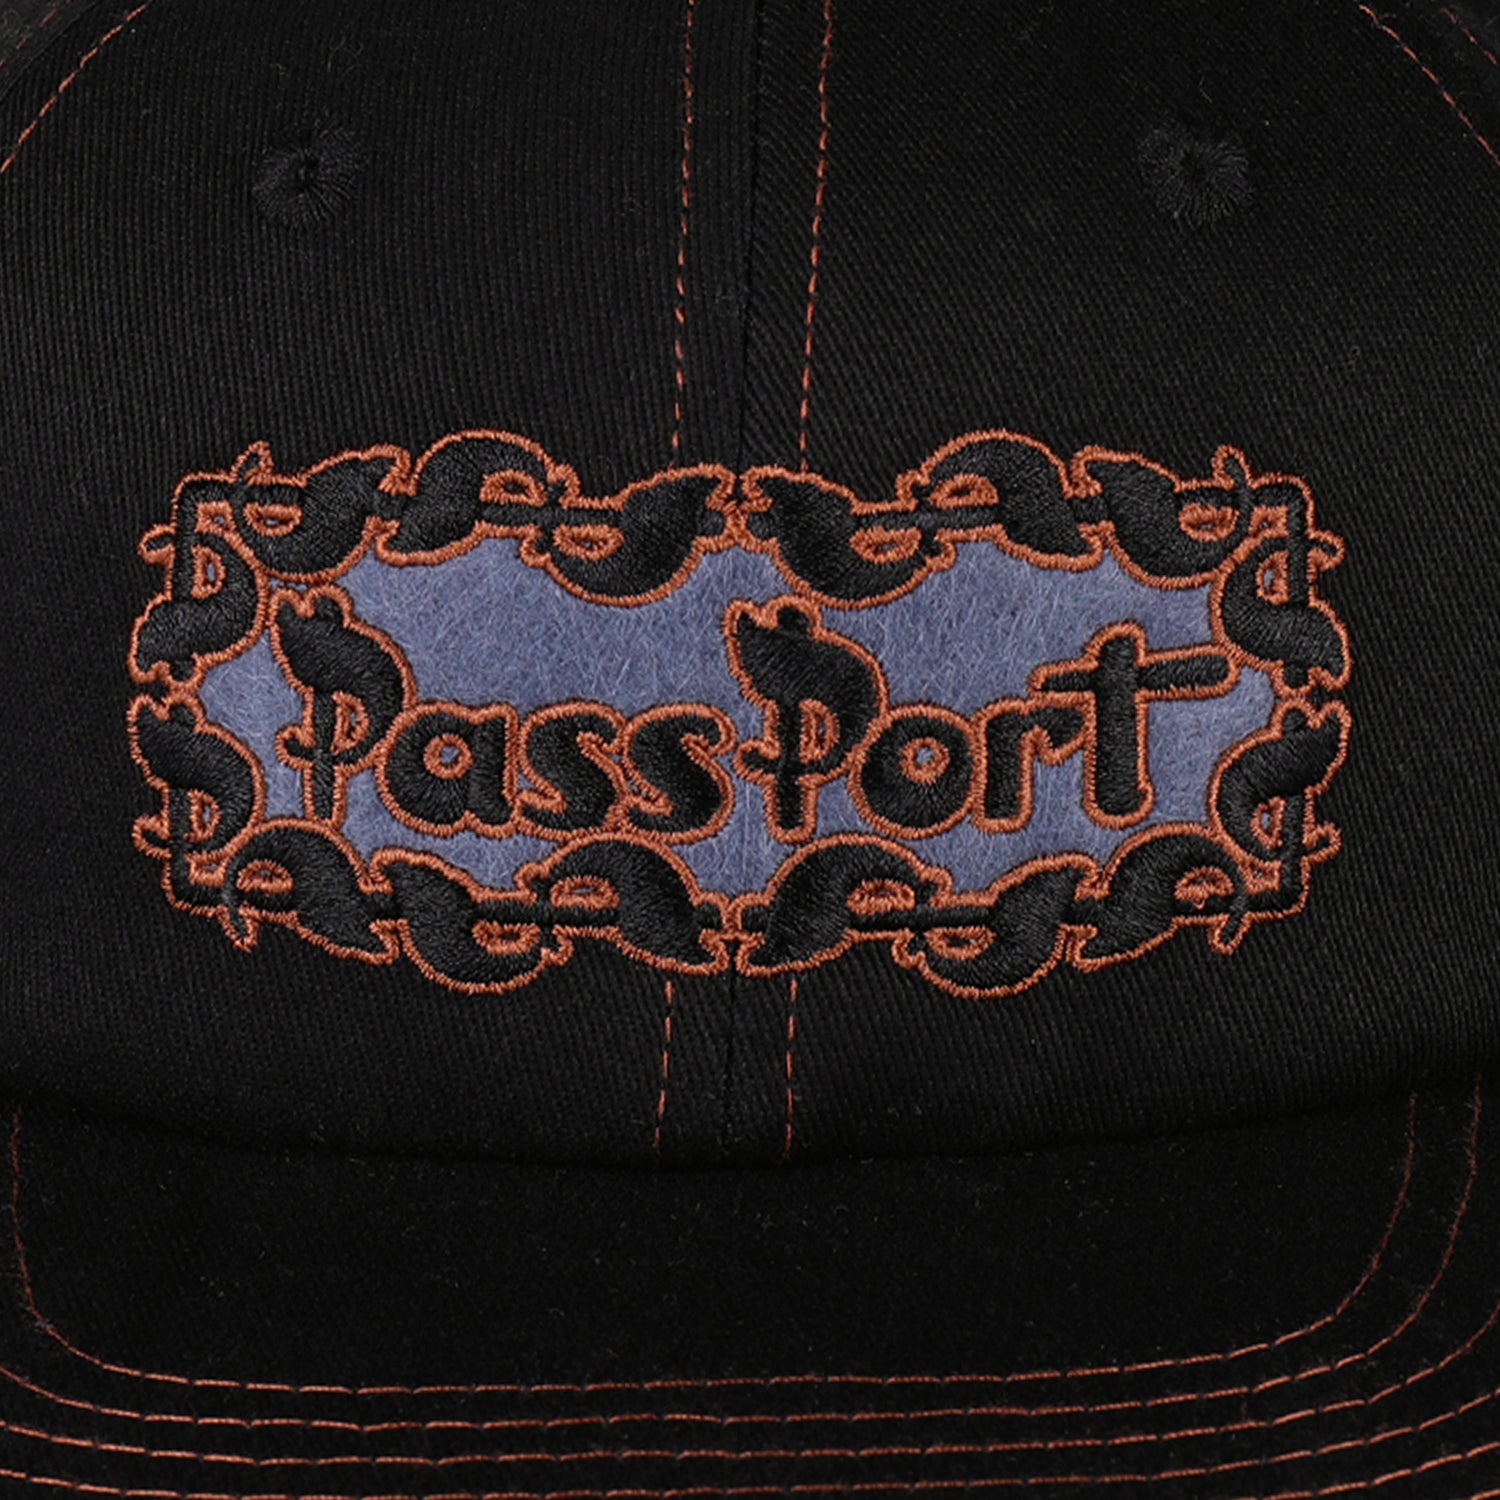 Pass~Port Pattoned Casual Cap - Black